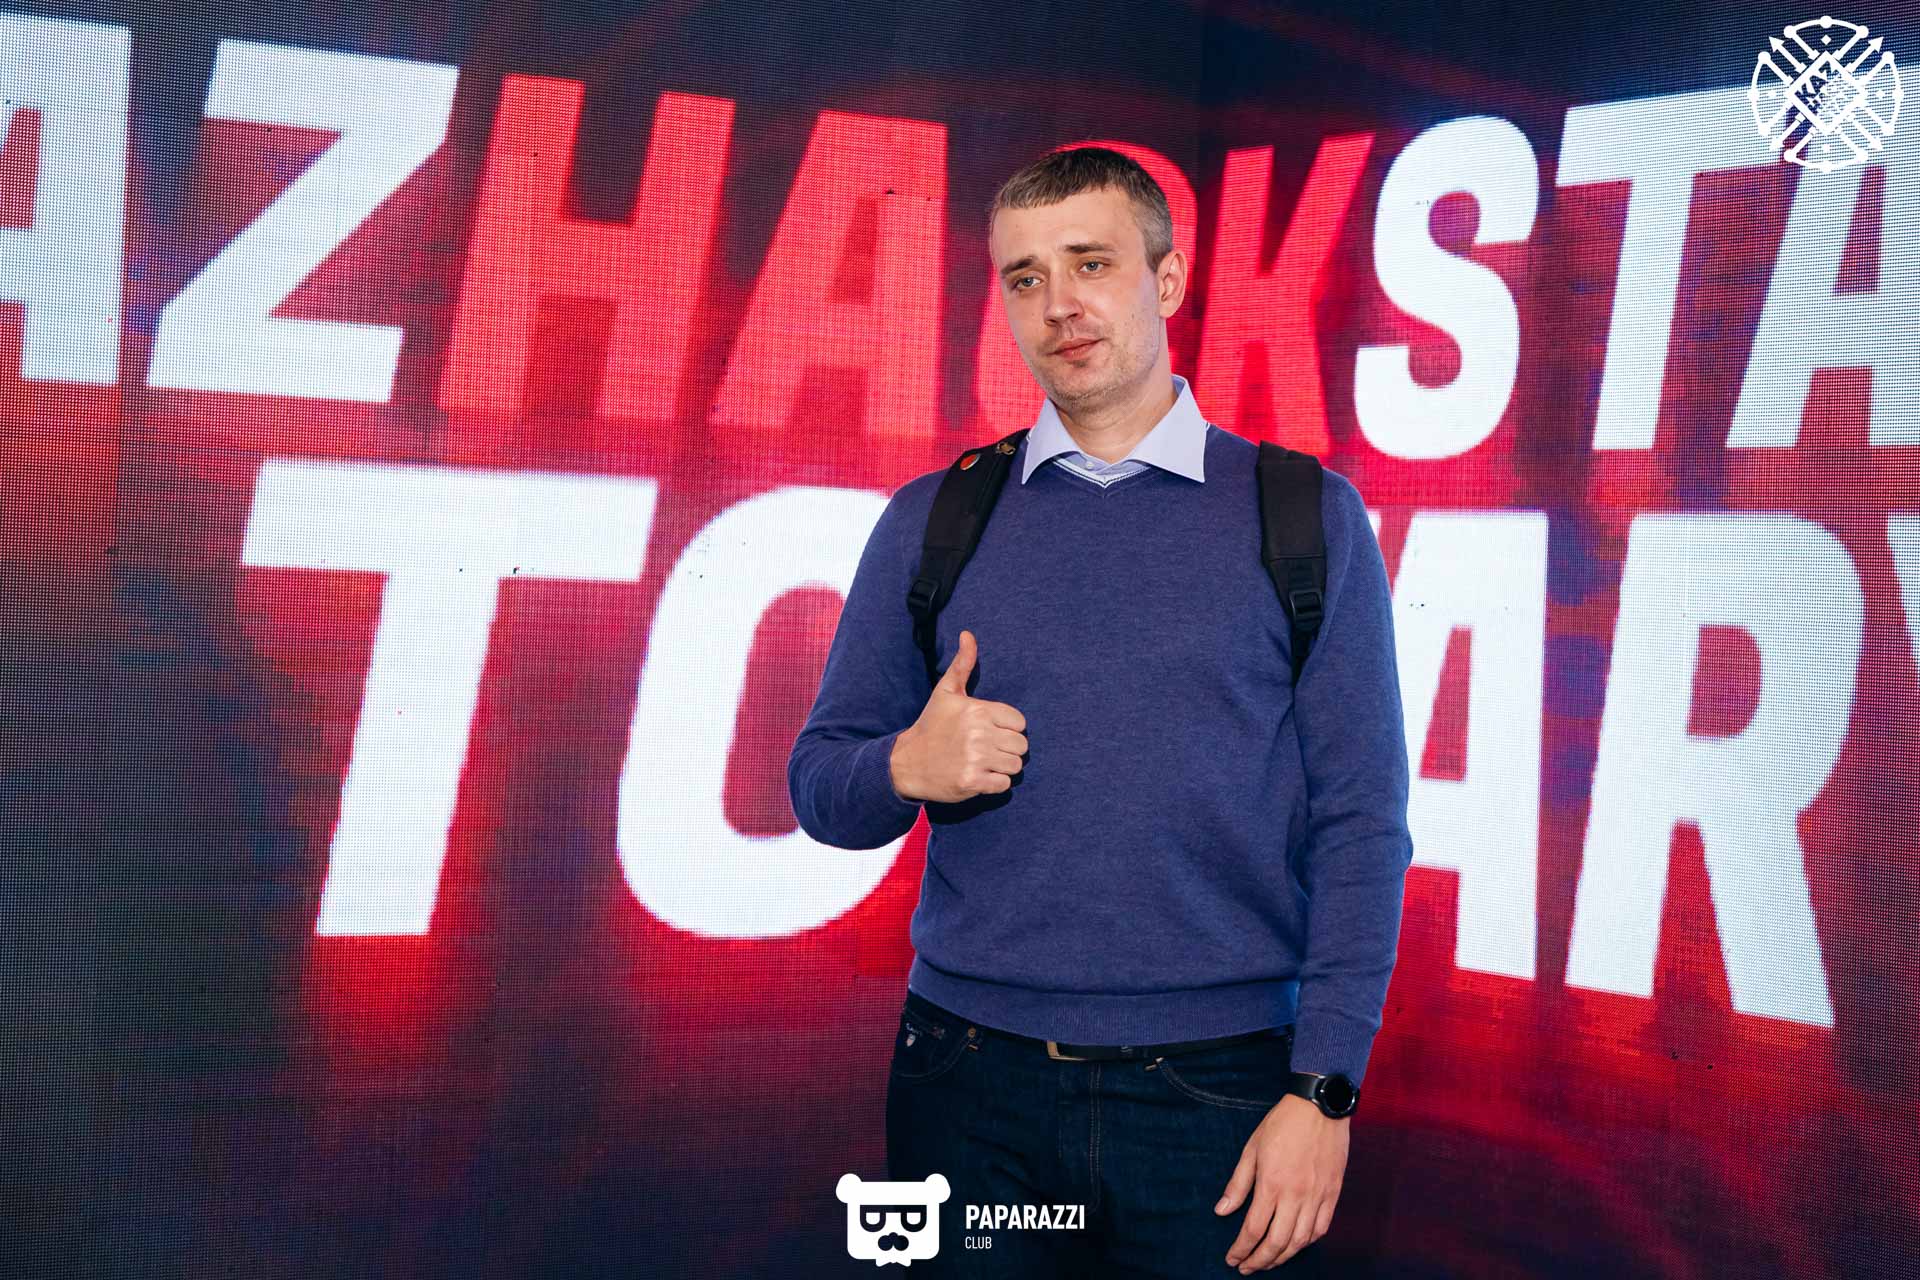 "KazHackStan 2022: Toitarys"